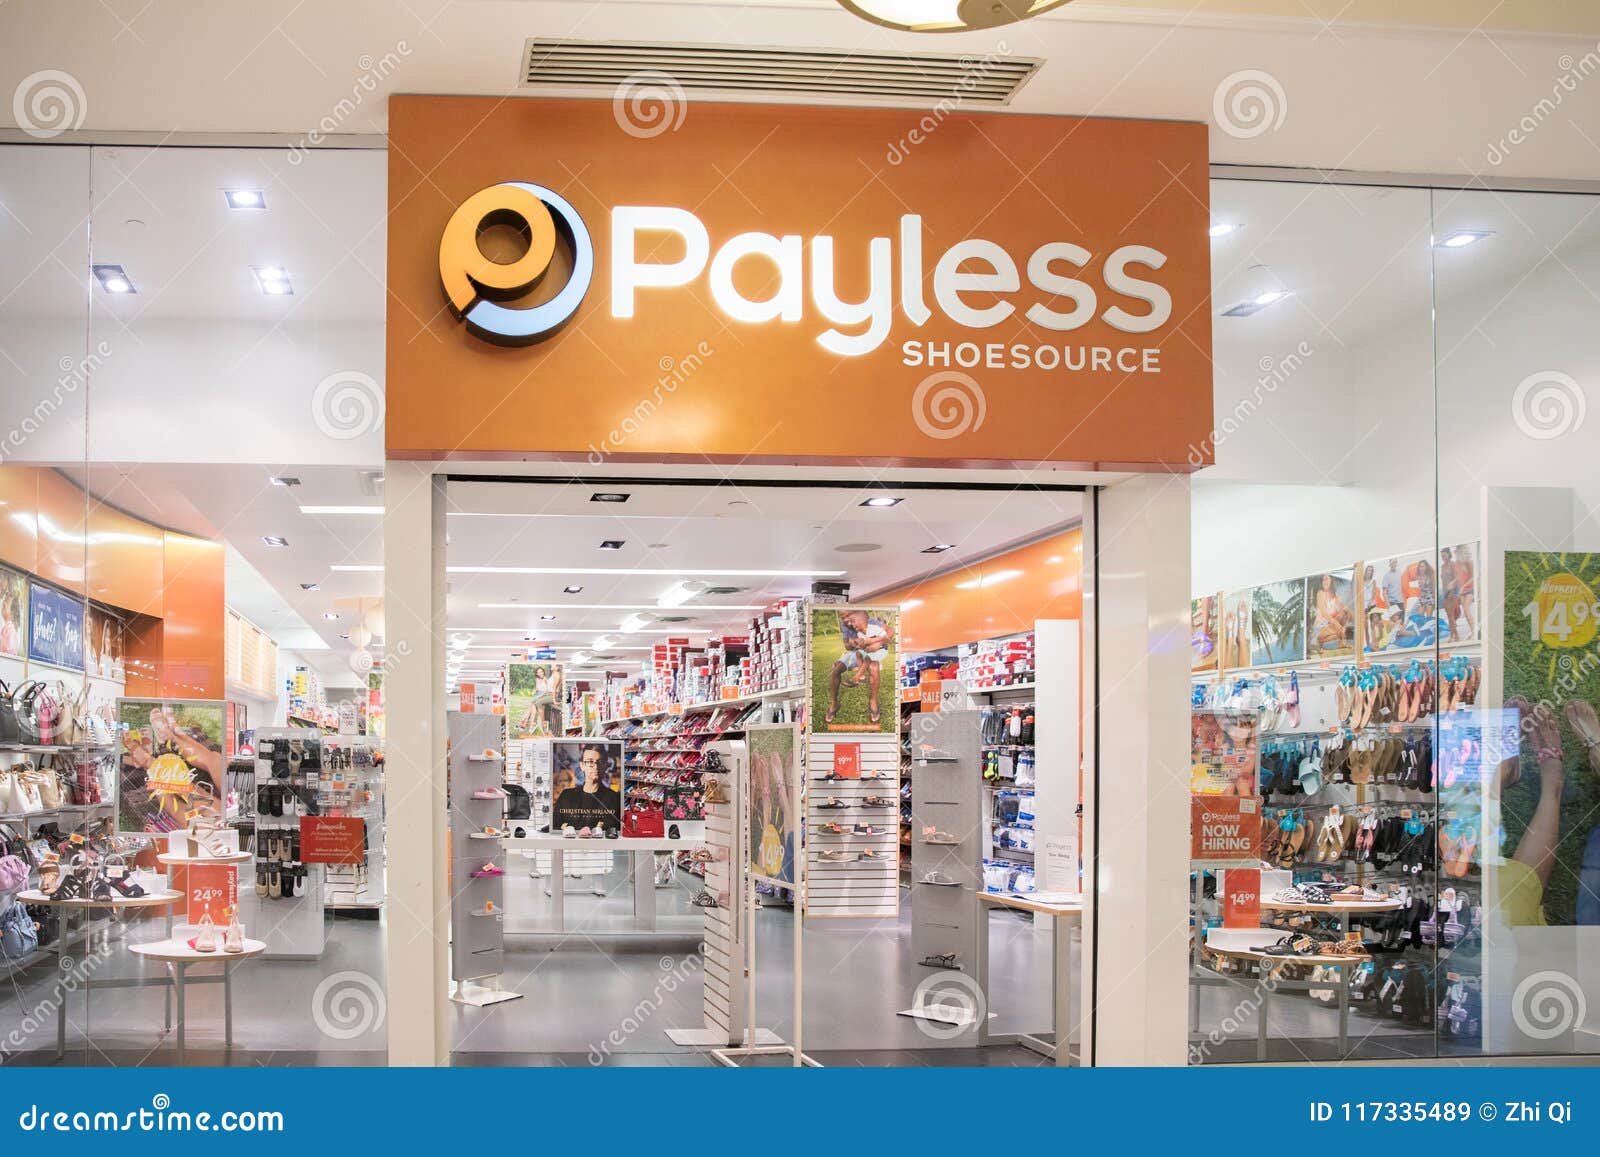 payless shoesource customer service